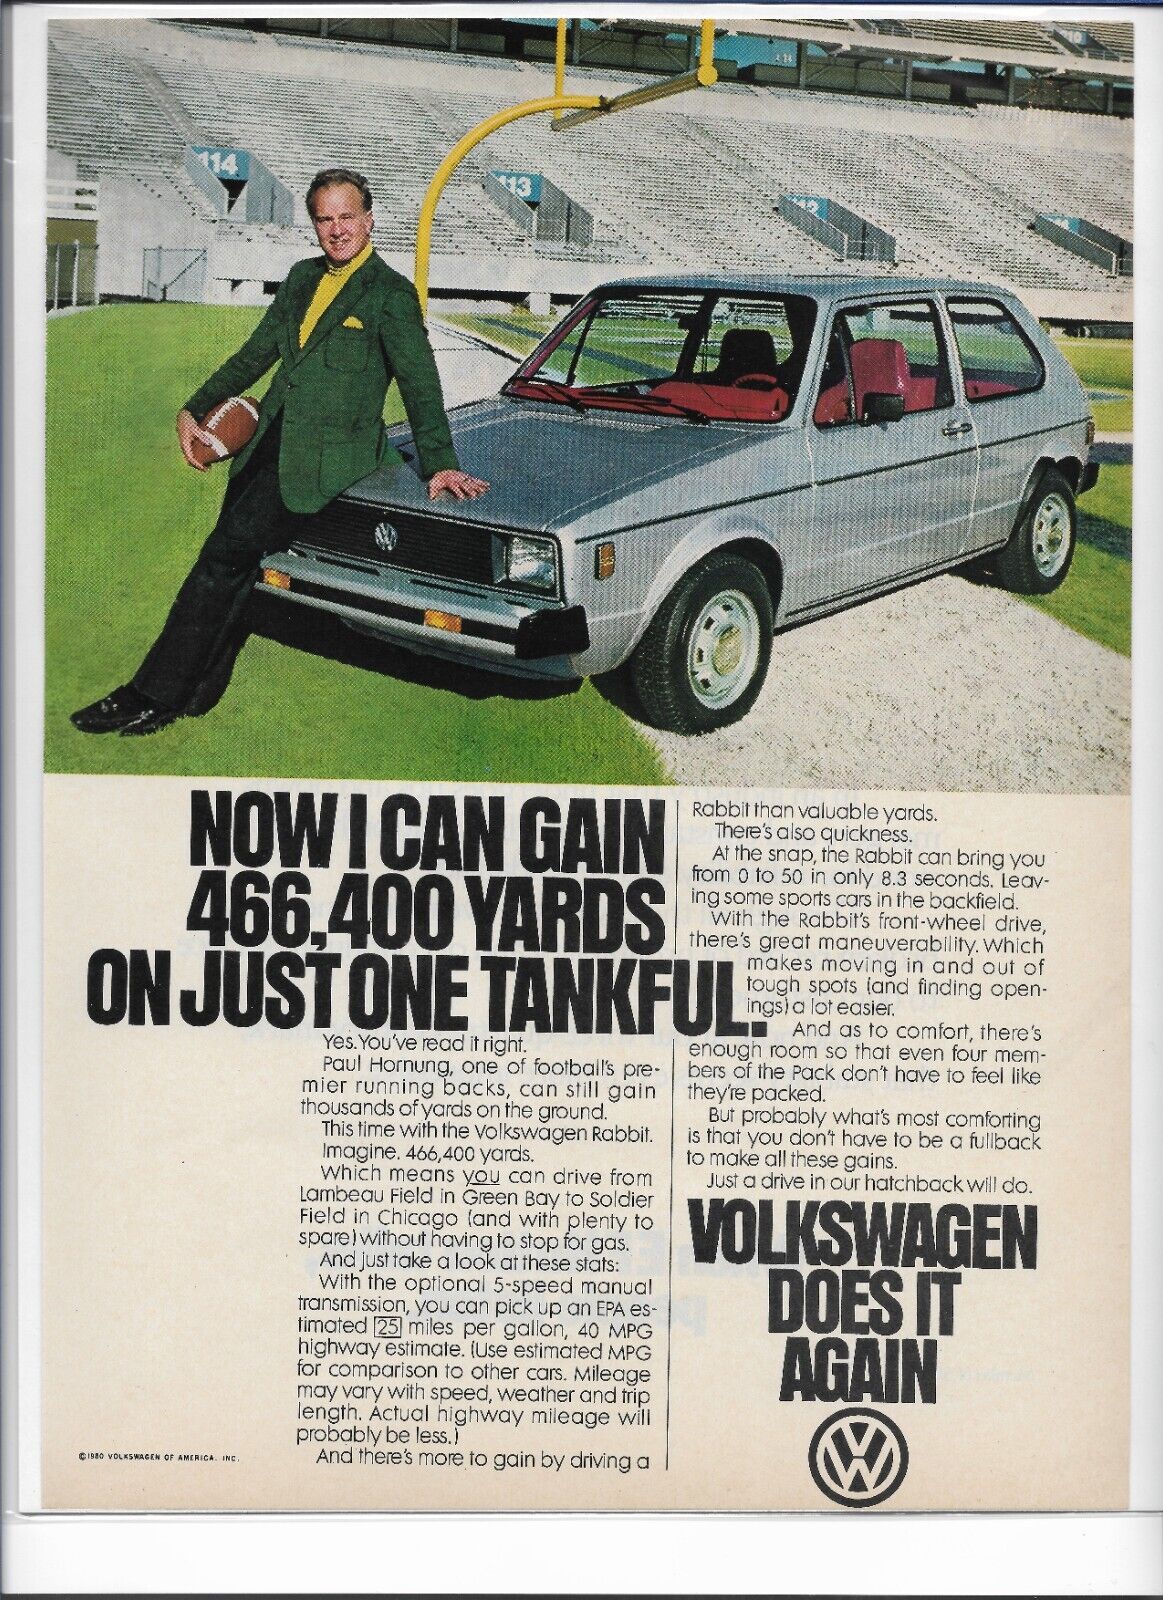 1980 Paul Hornung (Green Bay Packers HOF RB) Volkswagen Magazine Print Ad - 8x11